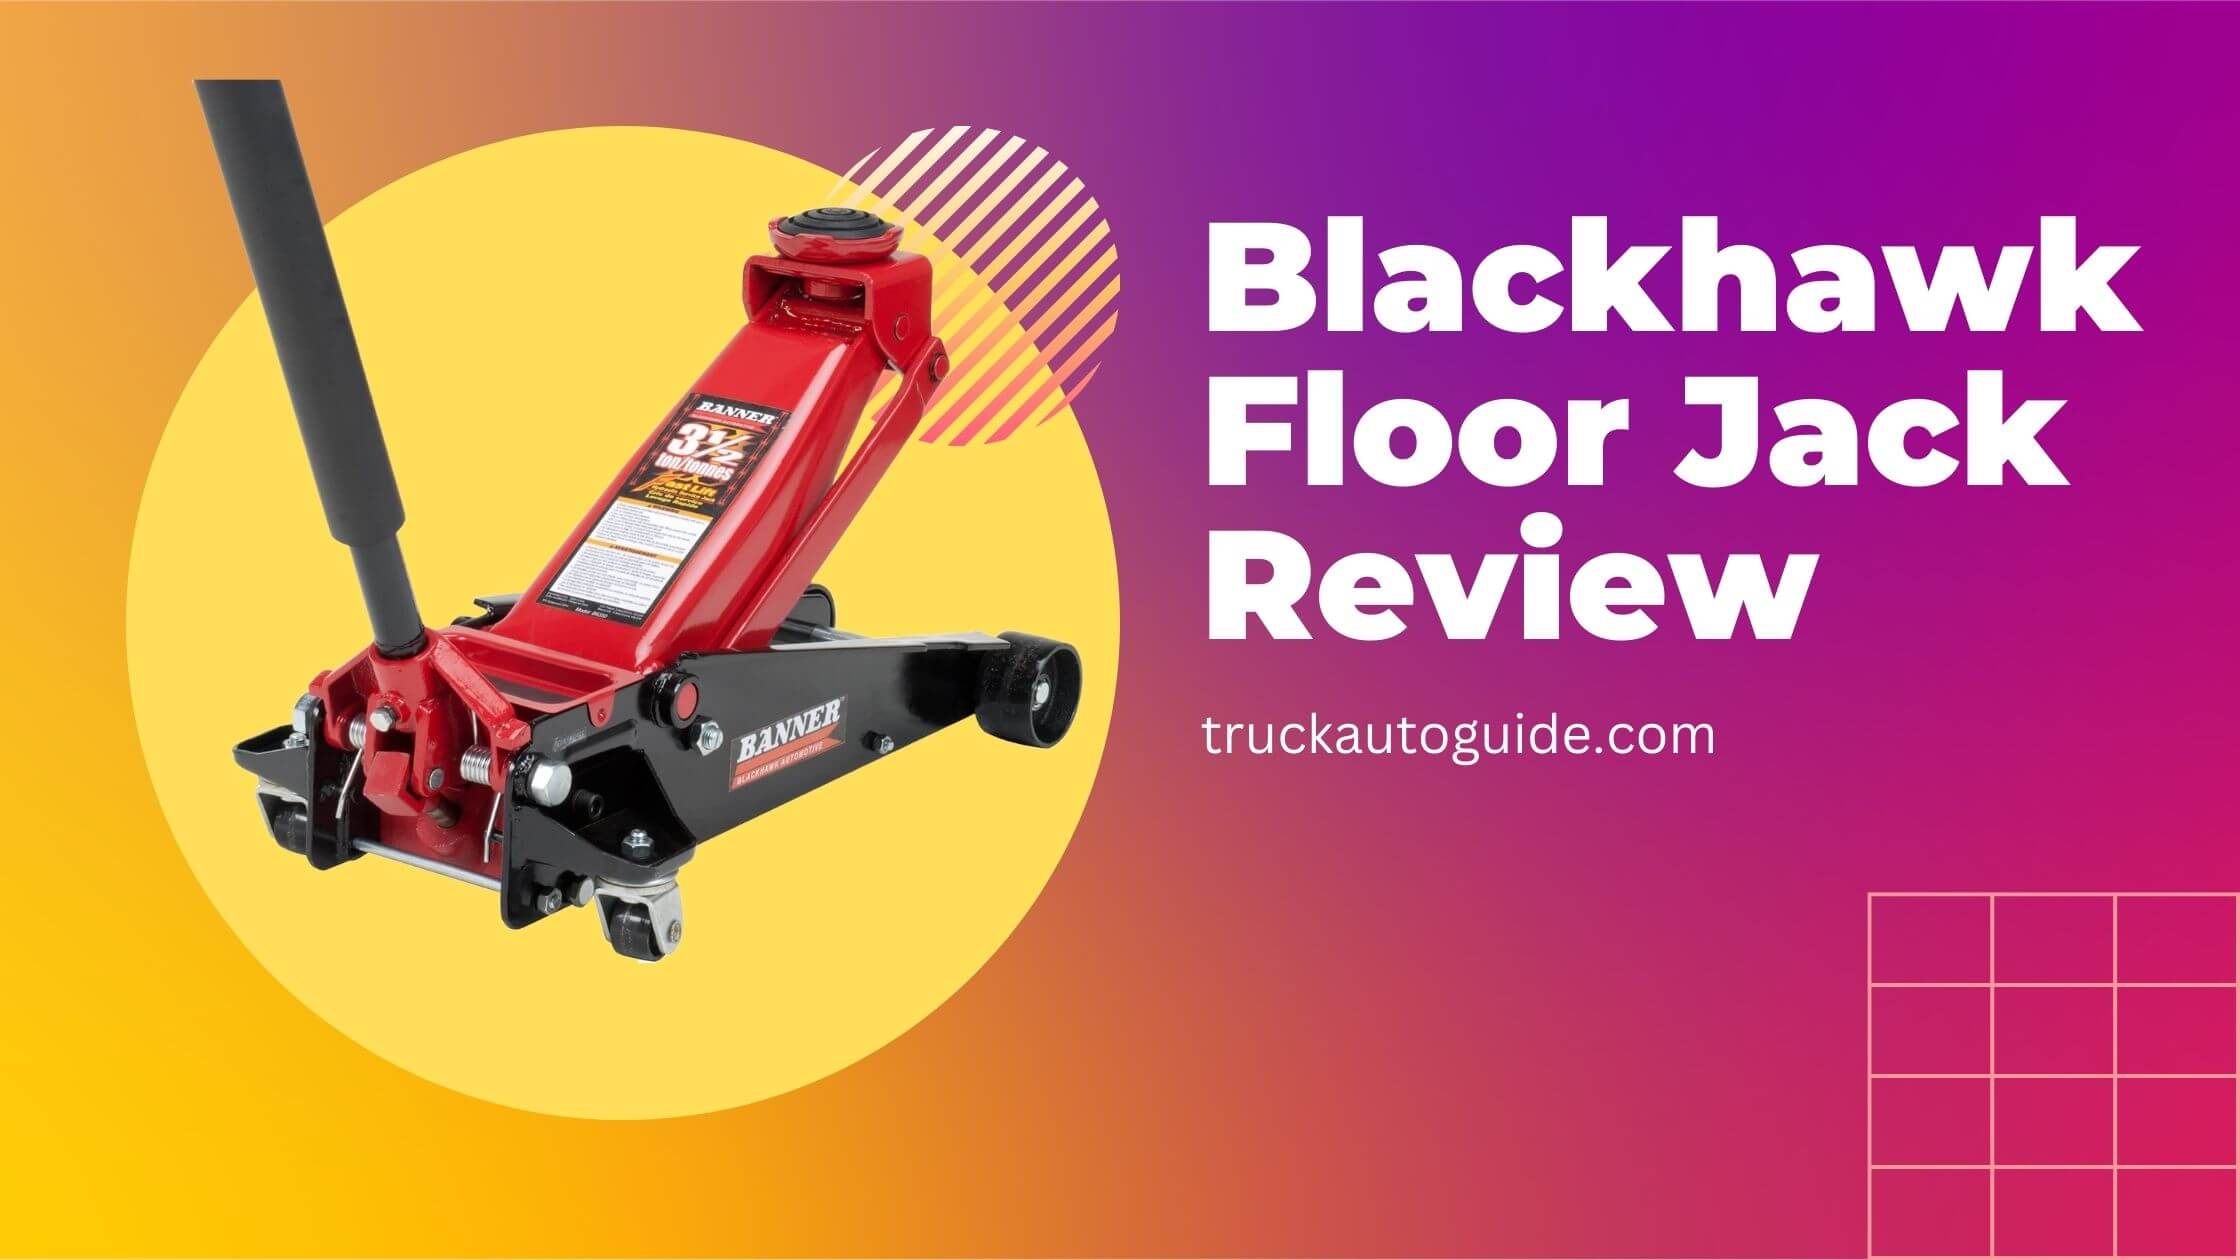 Blackhawk Floor Jack Review